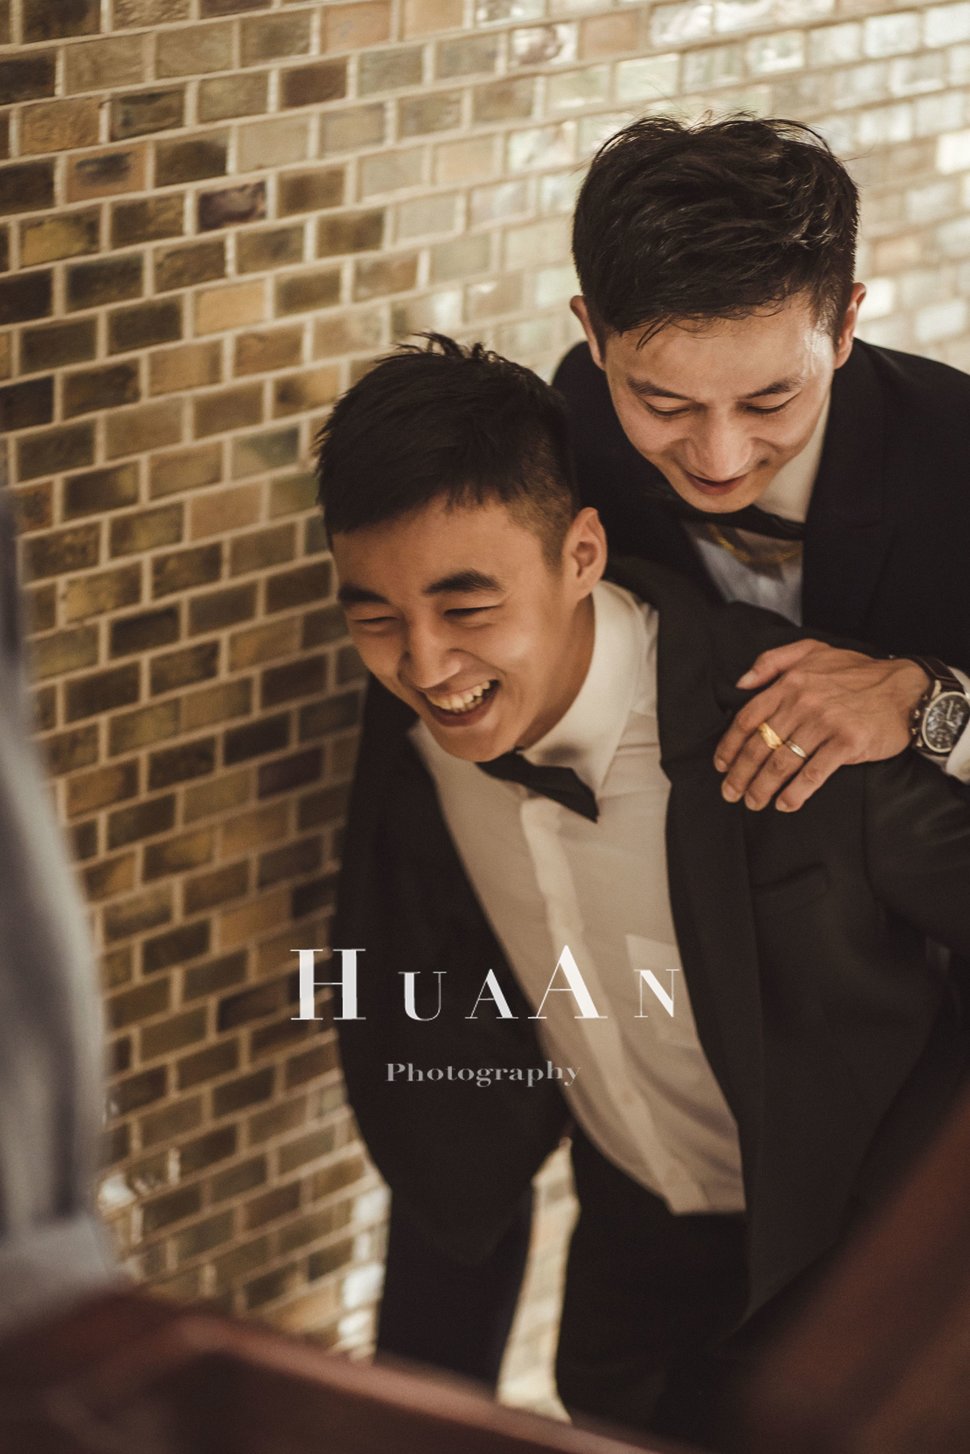 婚禮攝影 - Huaan Photography《結婚吧》